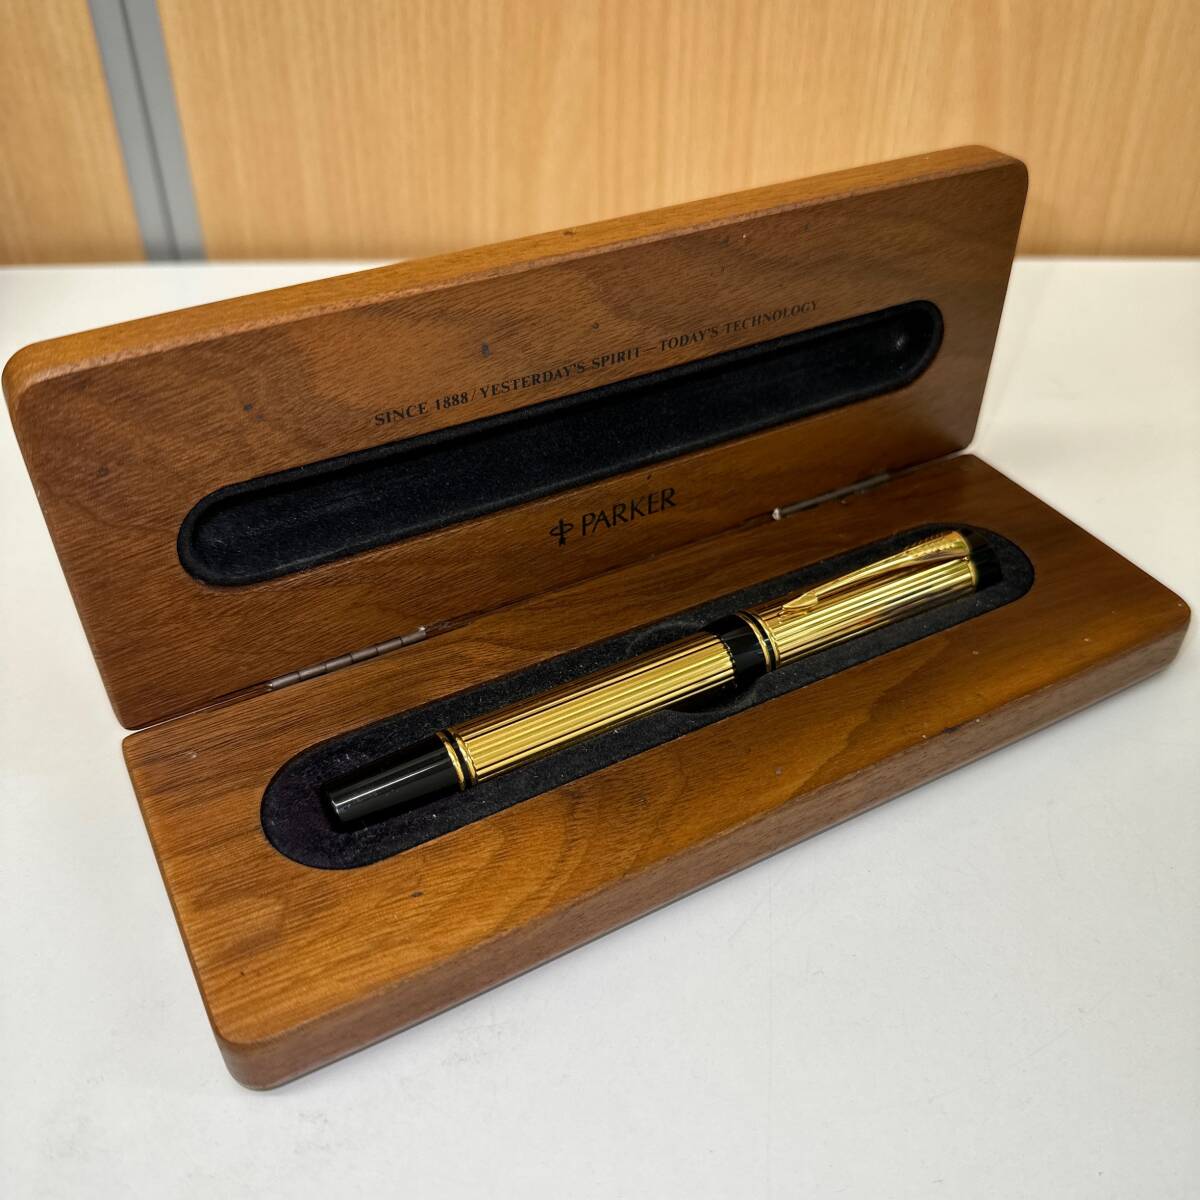 【TM0429】PARKER パーカー デュオフォールド 万年筆 ペン先18K 750 木製ケース付 ゴールド × ブラックカラー 筆記用具 文房具の画像1